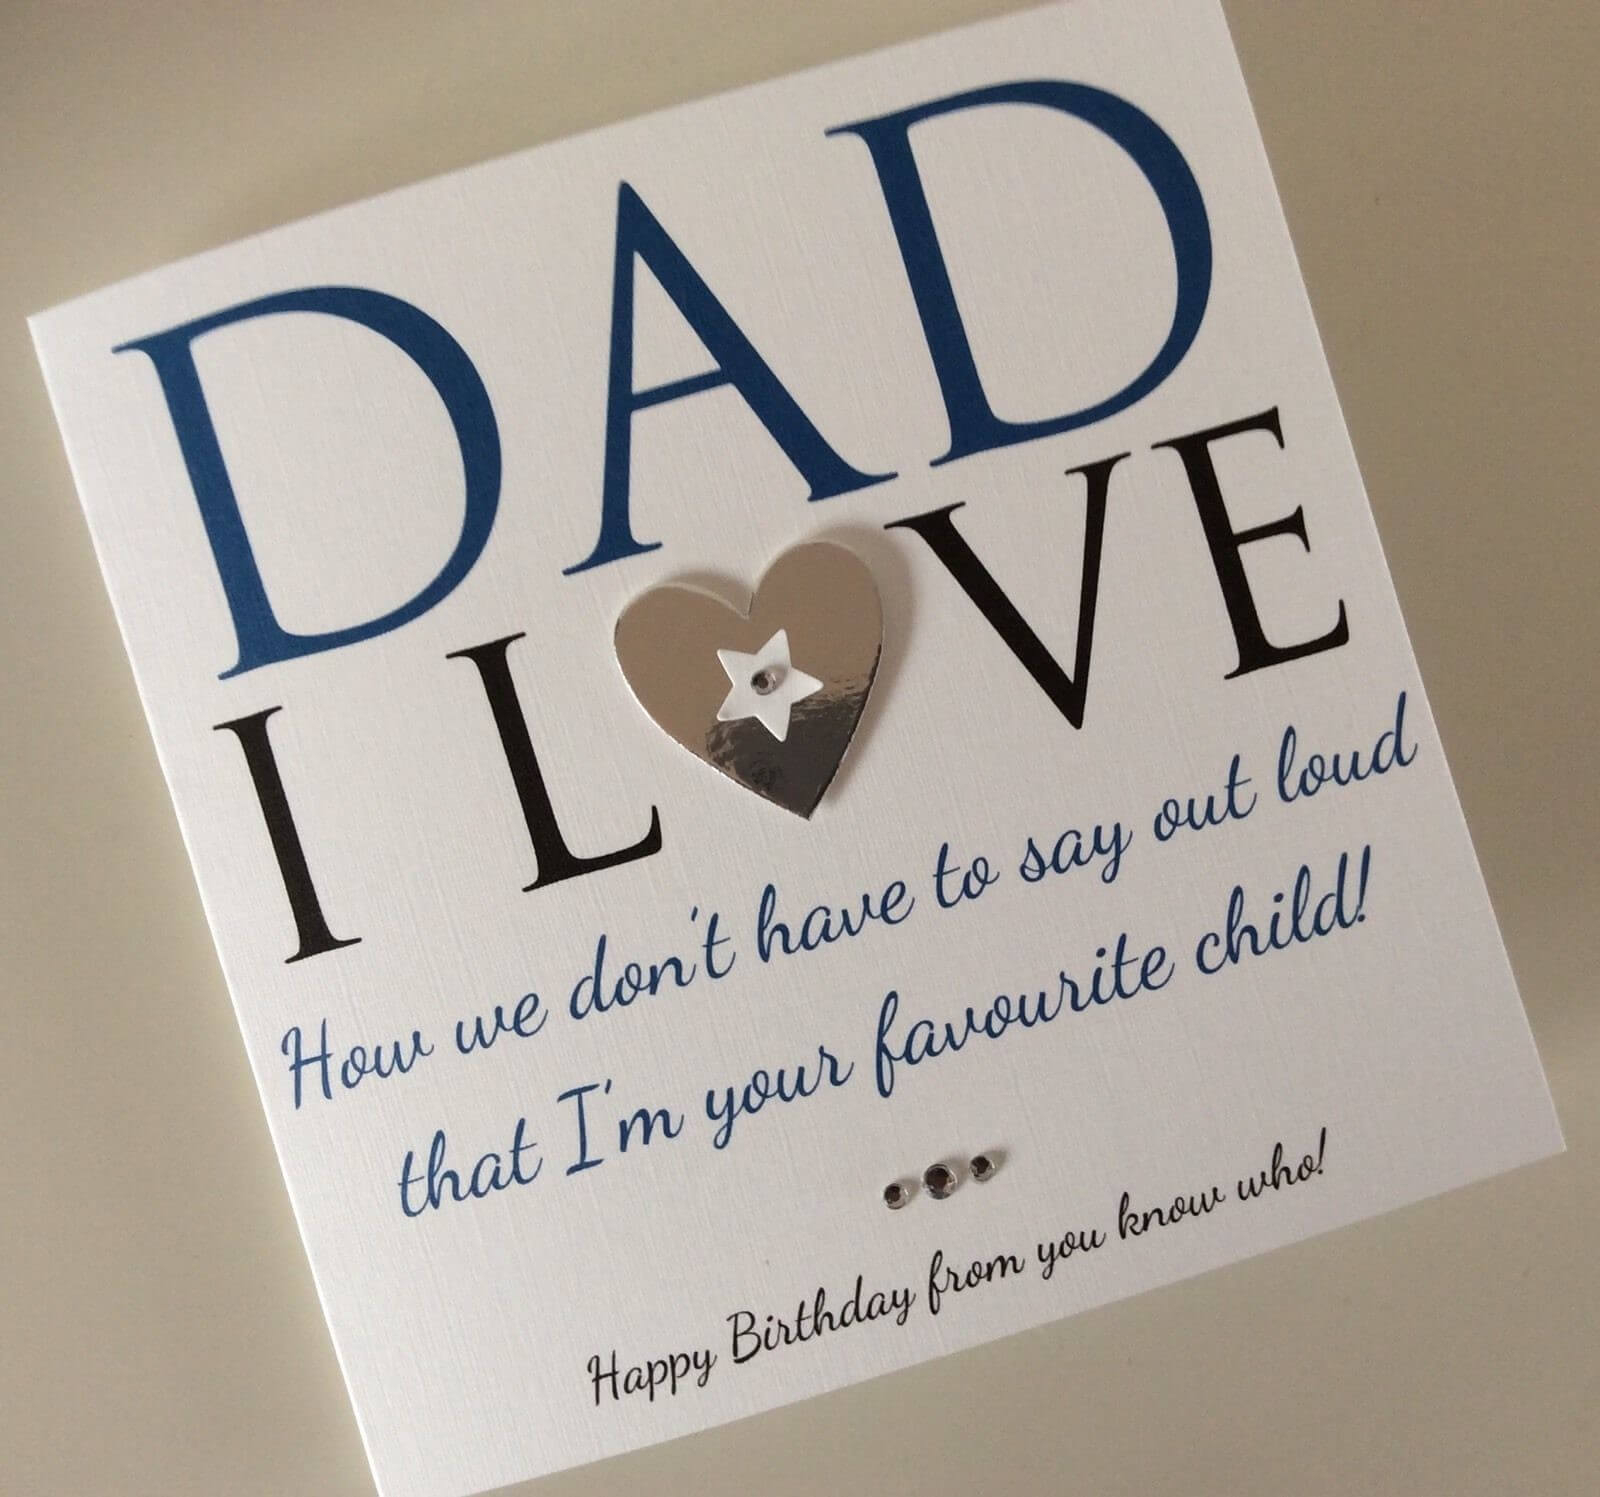 Homemade Birthday Card Ideas For Dad Birthday Card Ideas For Dad Examples And Forms